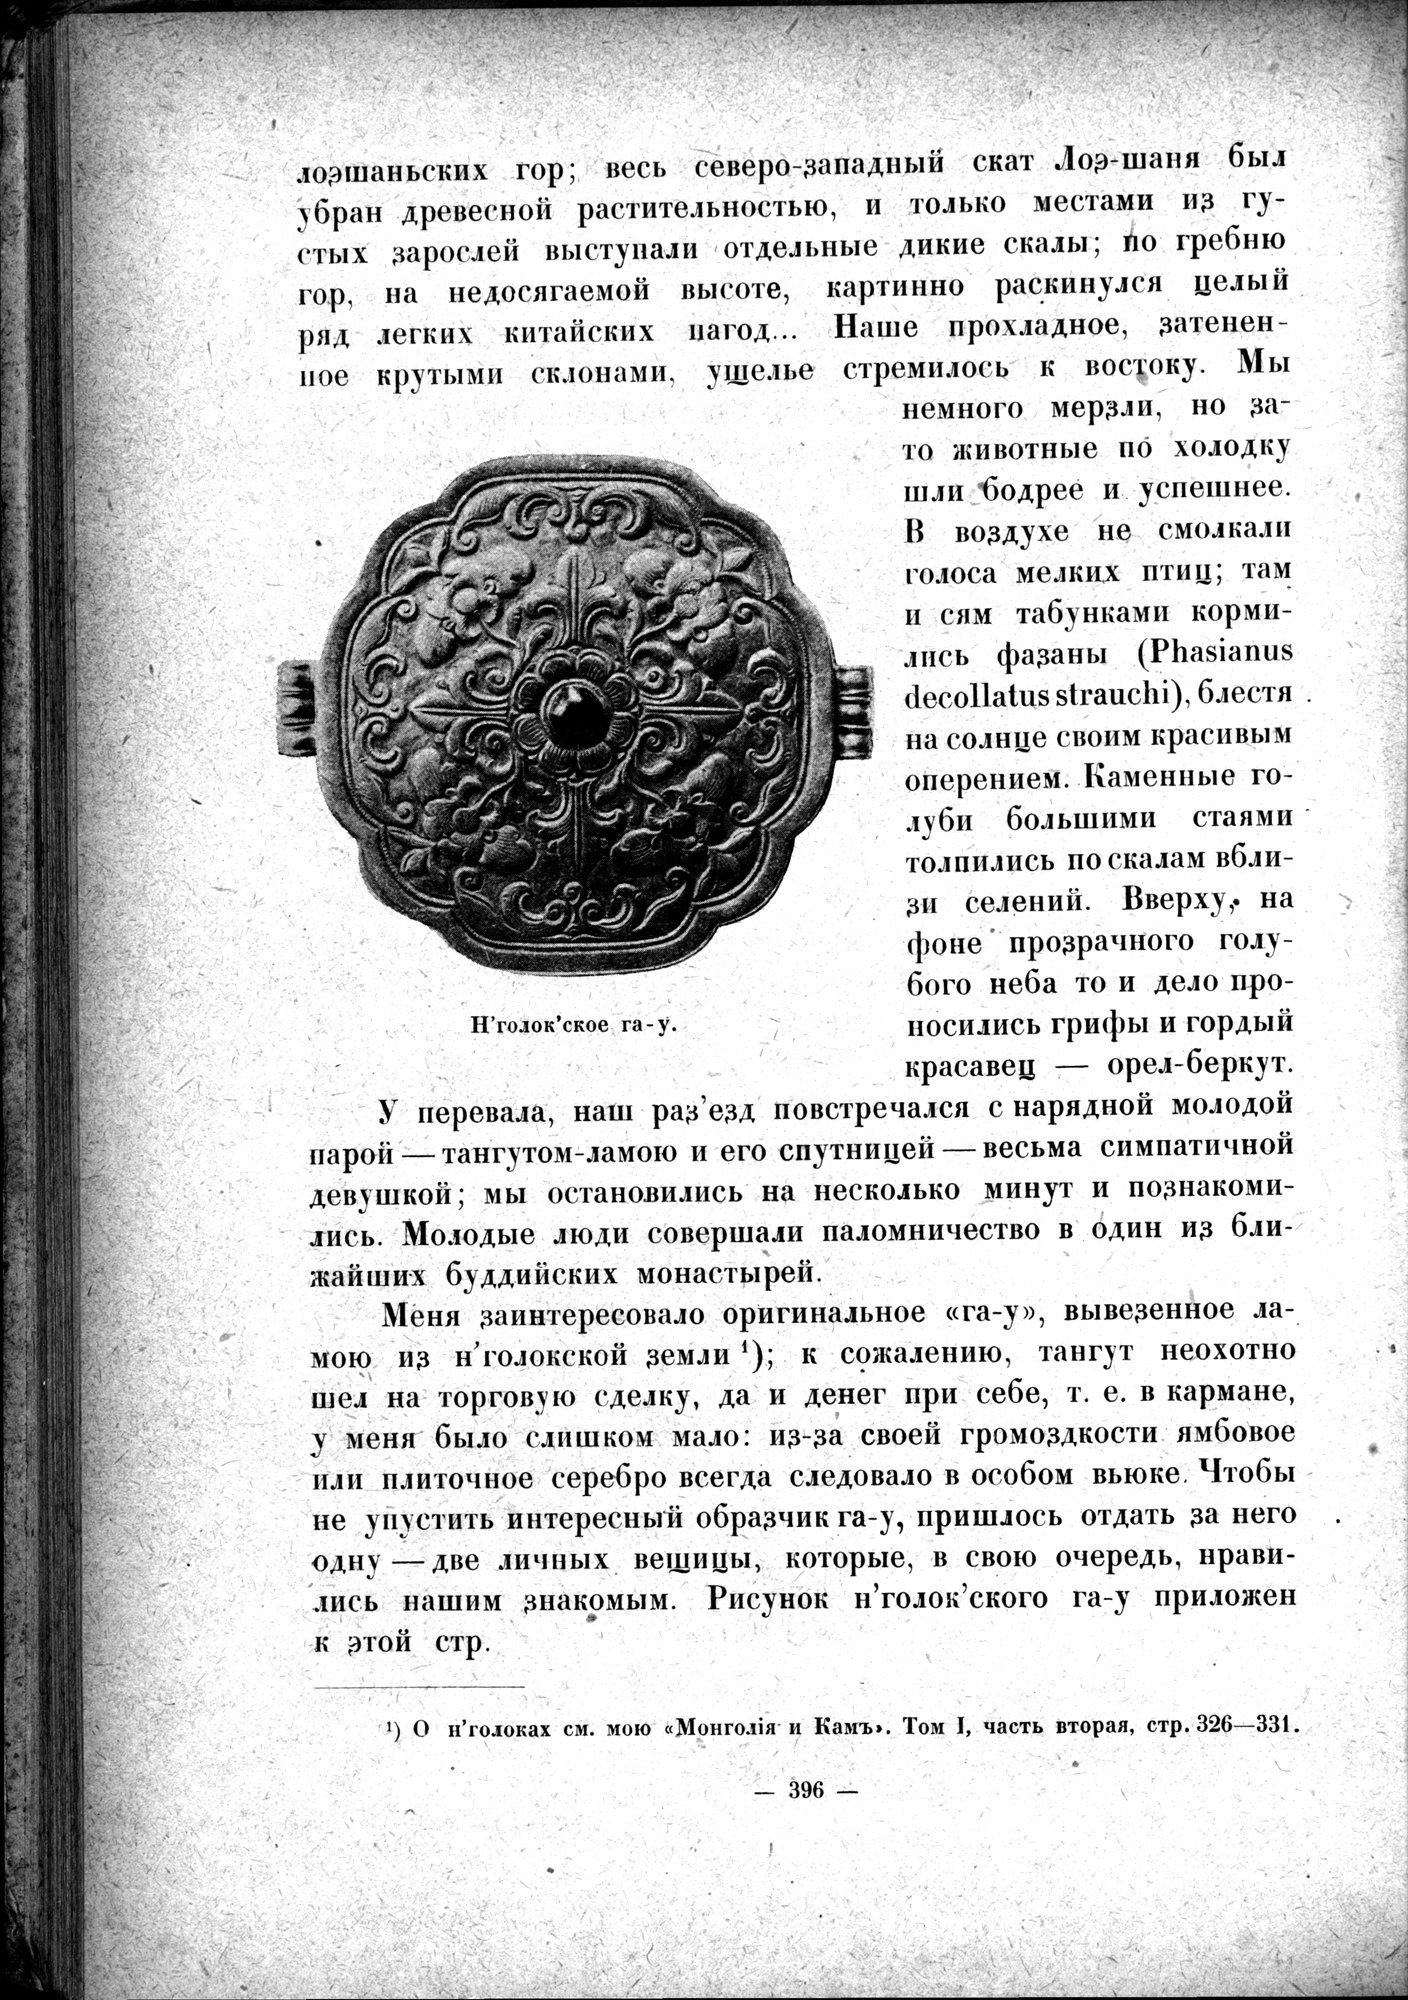 Mongoliya i Amdo i mertby gorod Khara-Khoto : vol.1 / Page 450 (Grayscale High Resolution Image)